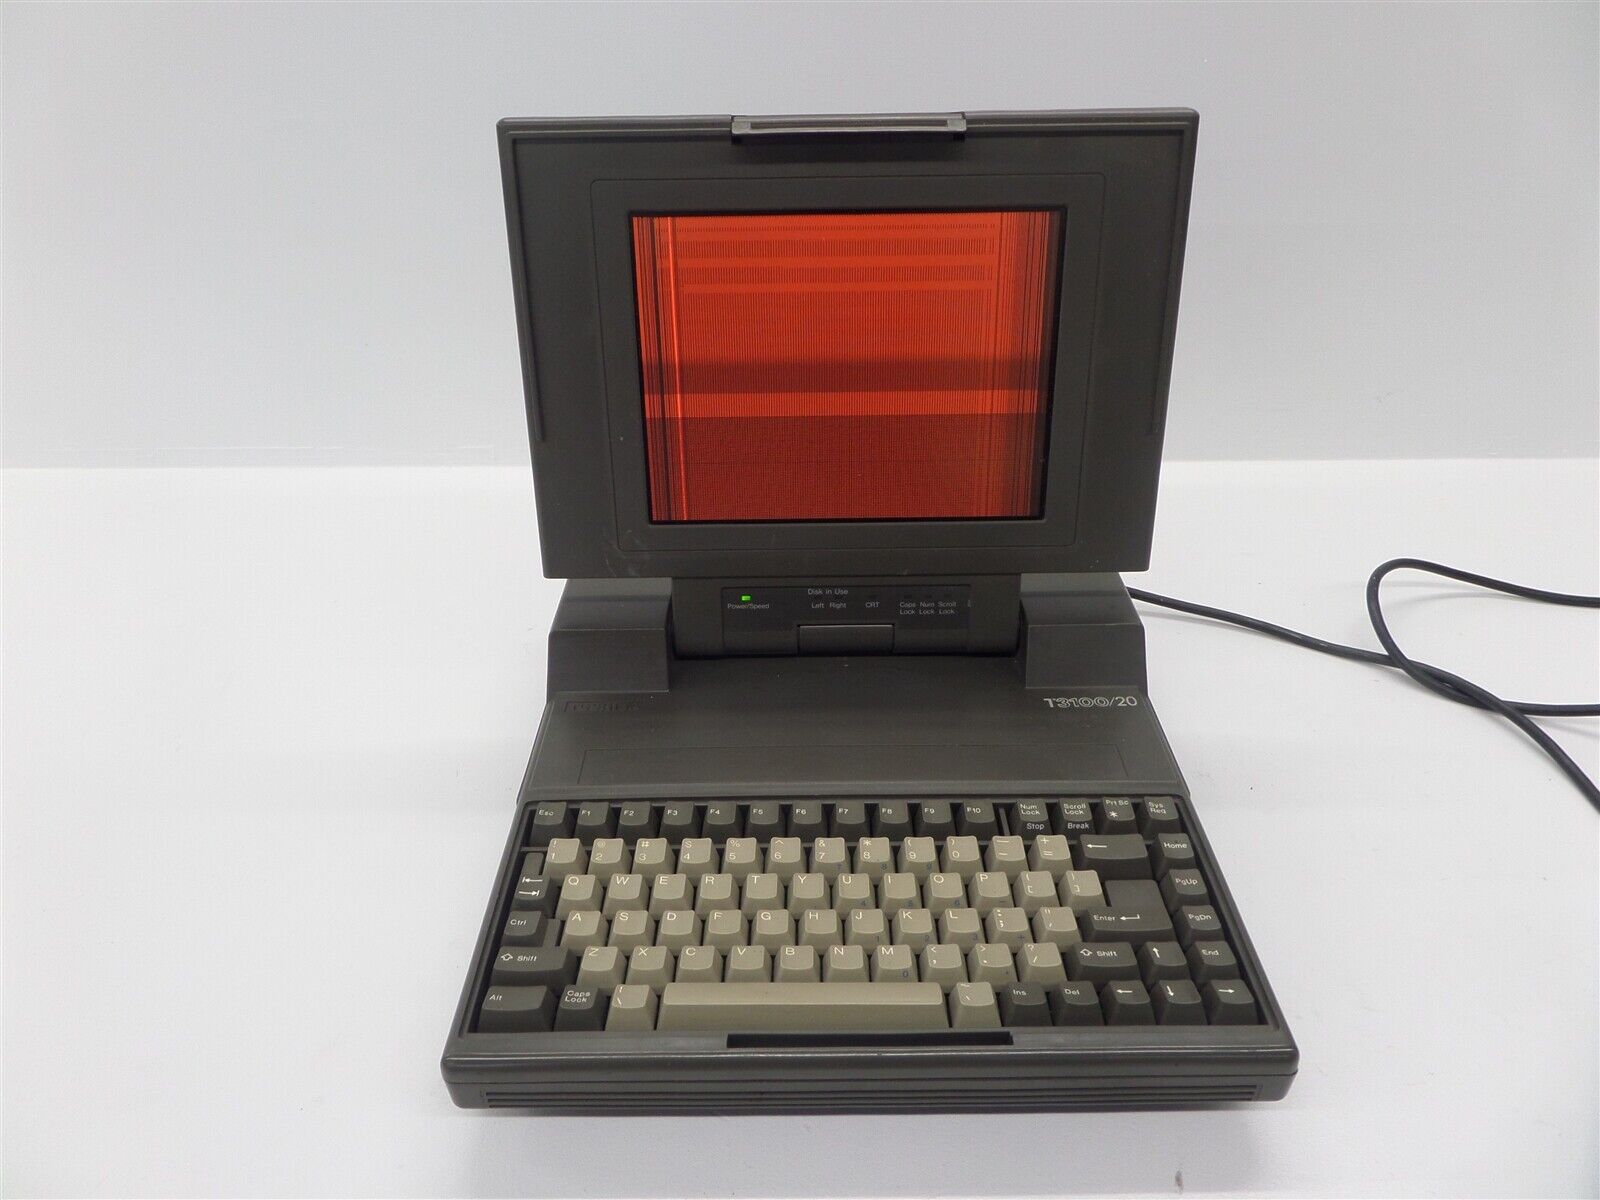 Vintage Toshiba T3100/20 PA7038U Laptop - Display Issue